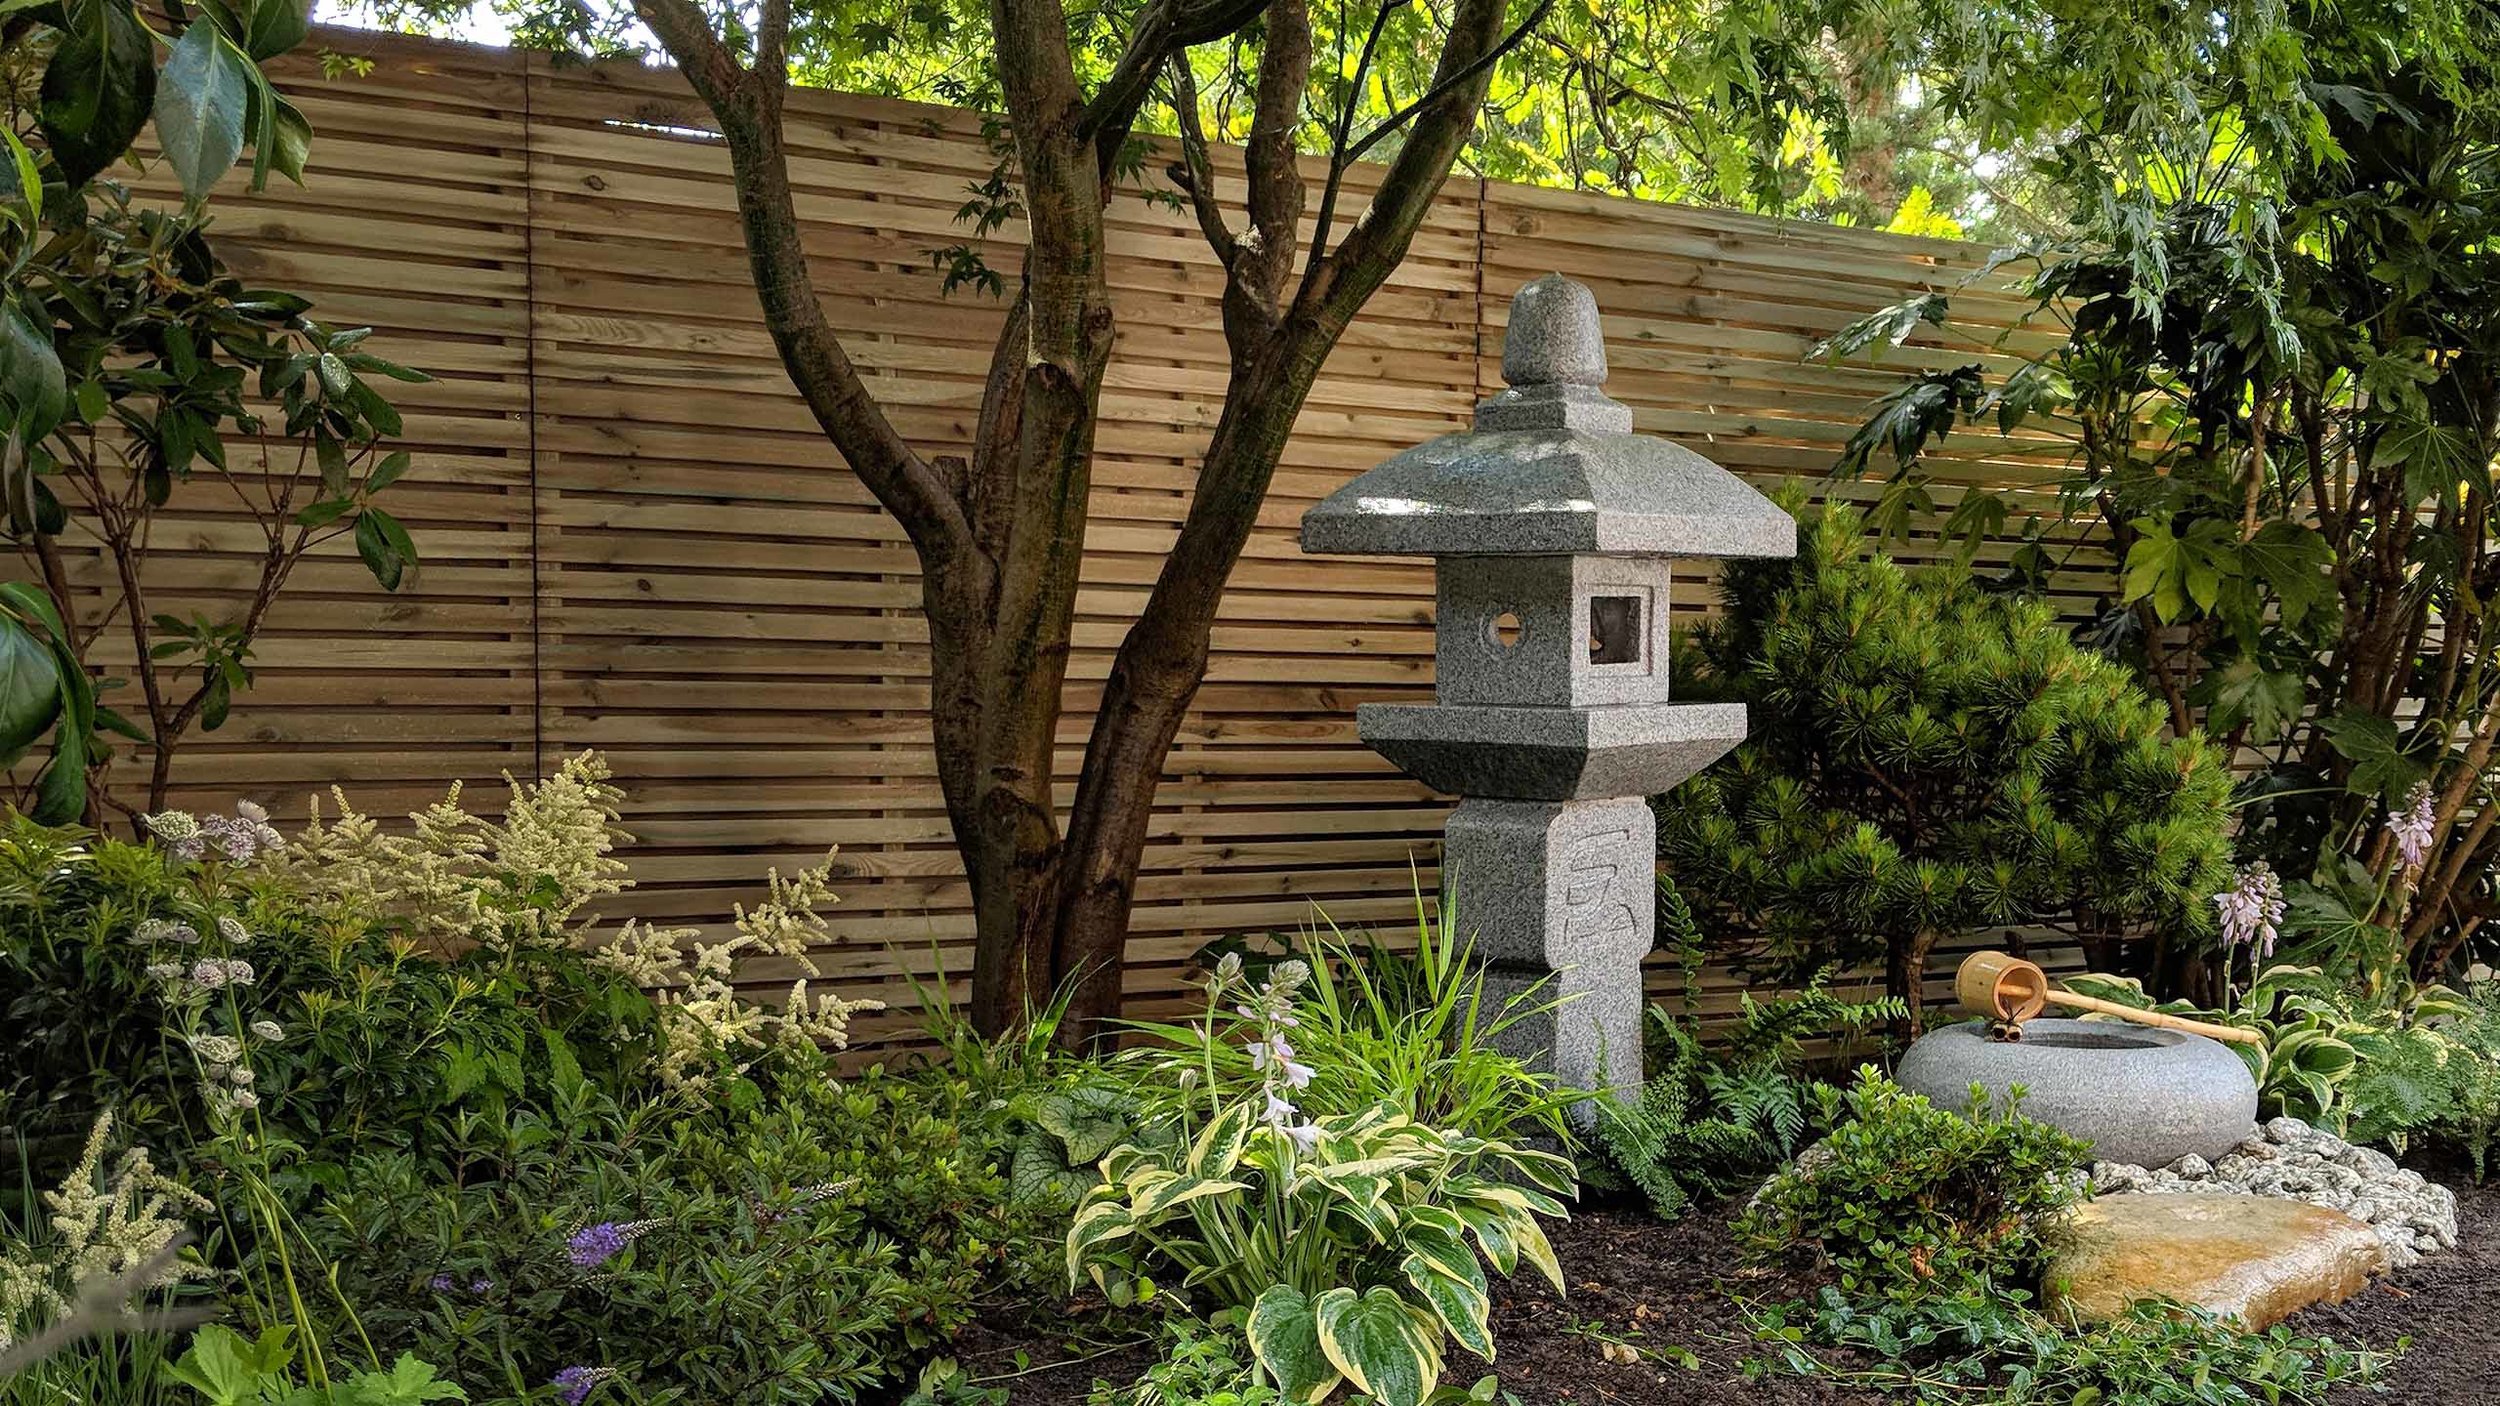 Cheshire Garden Design: Japanese garden with Oribe (Lantern) and Tetsu Bachi Basin 